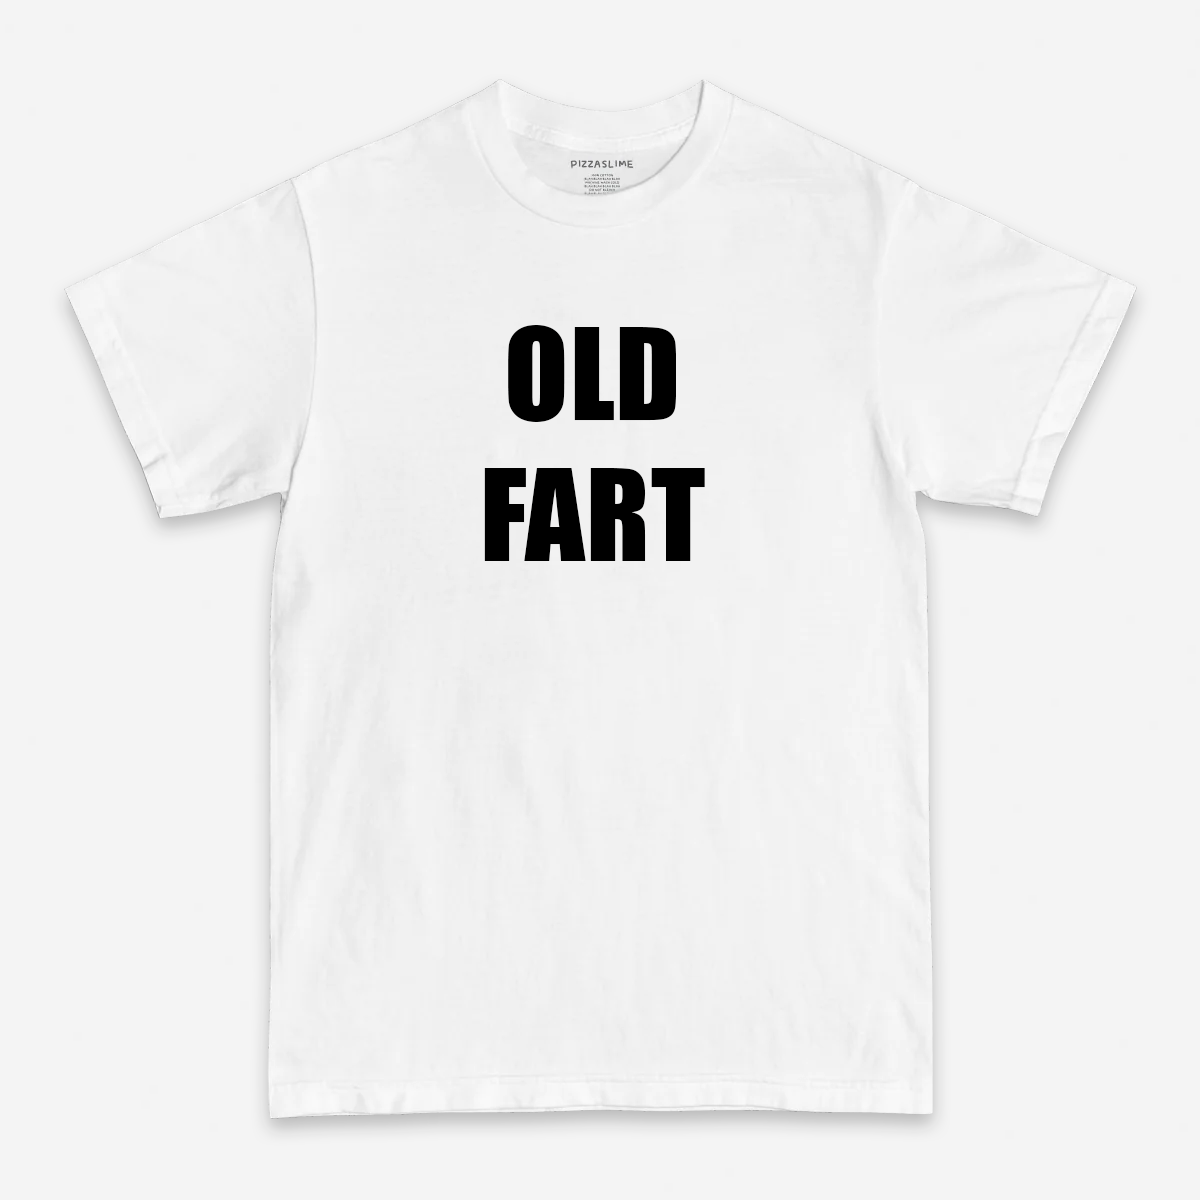 OLD FART T-shirt